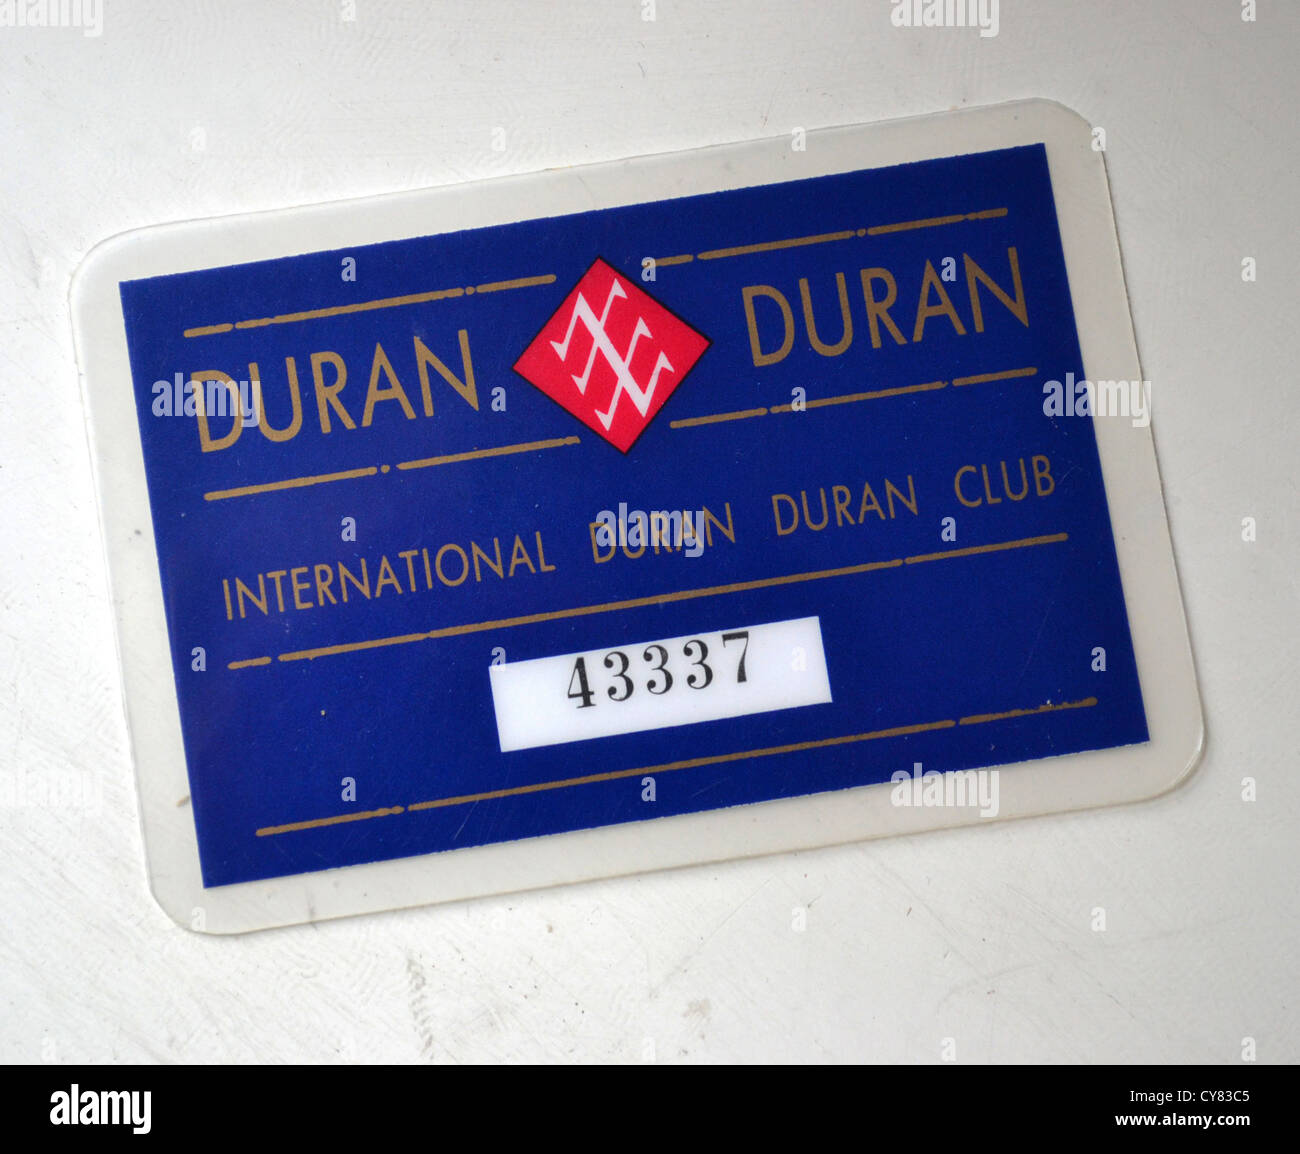 A membership card for the Duran Duran fan club Stock Photo - Alamy